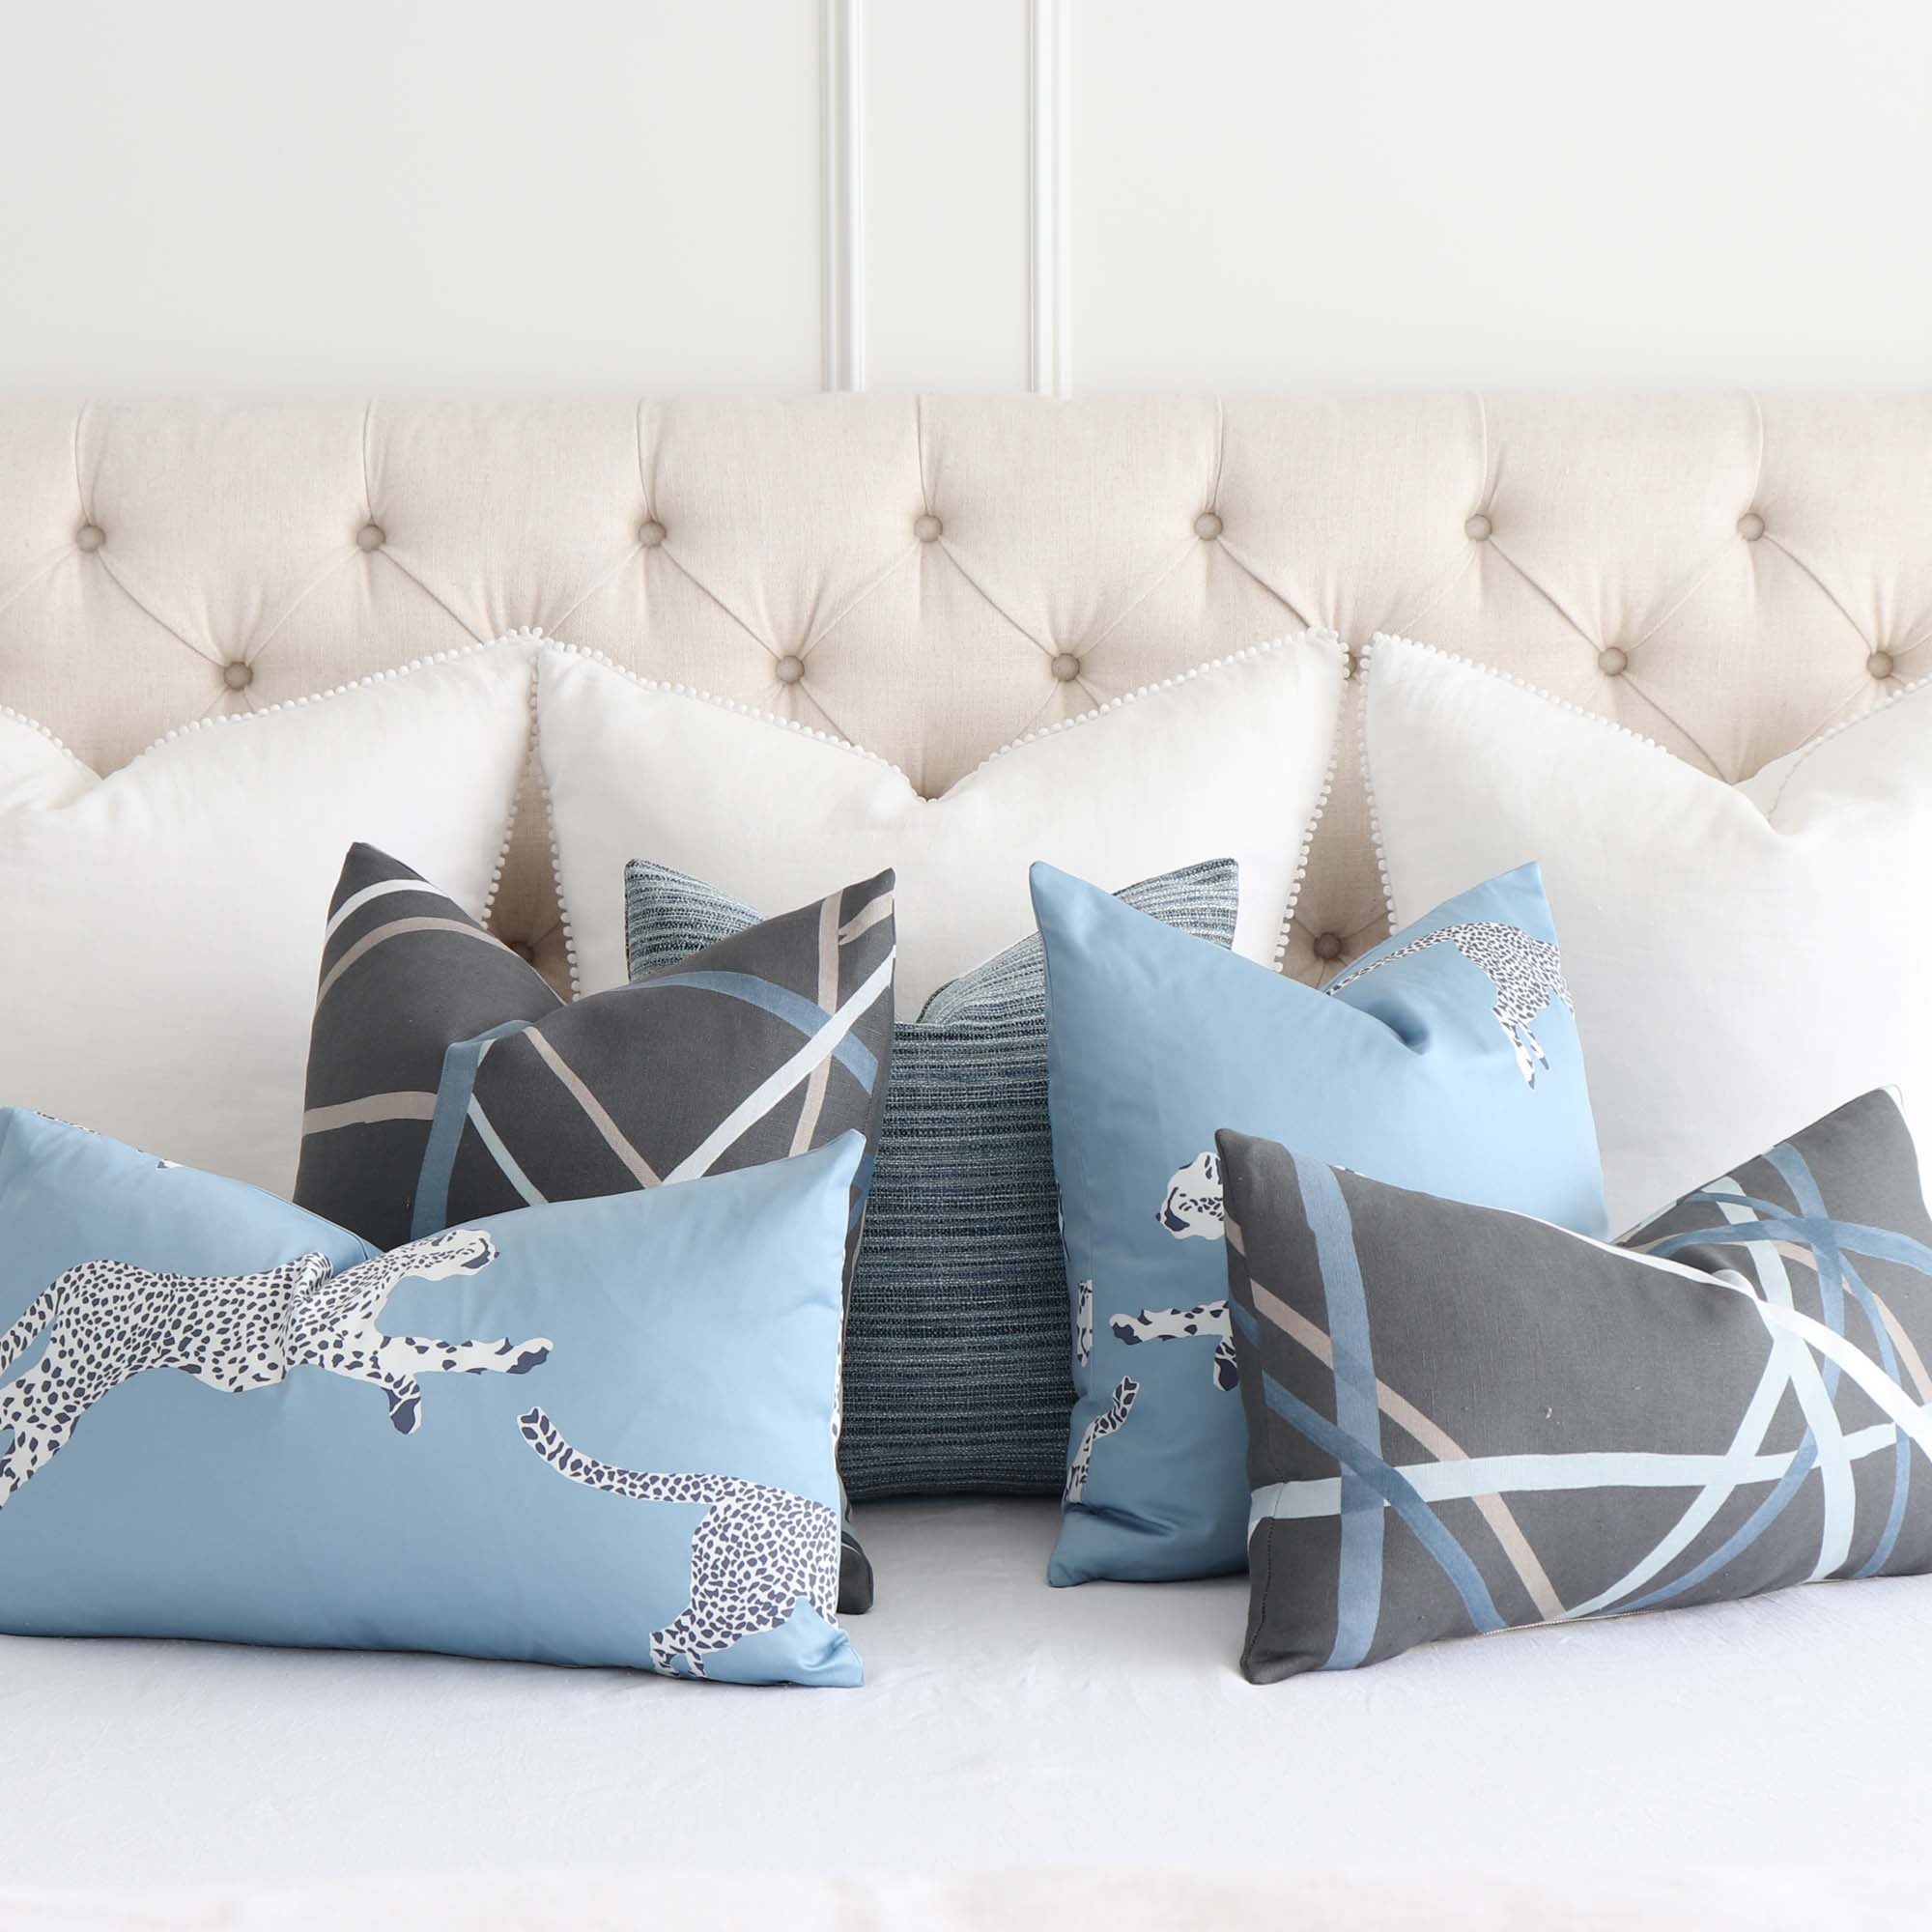 Schumacher Formentera Denim Textured Stripe Decorative Throw Pillow Cover with Matching Throw Pillows on Bed